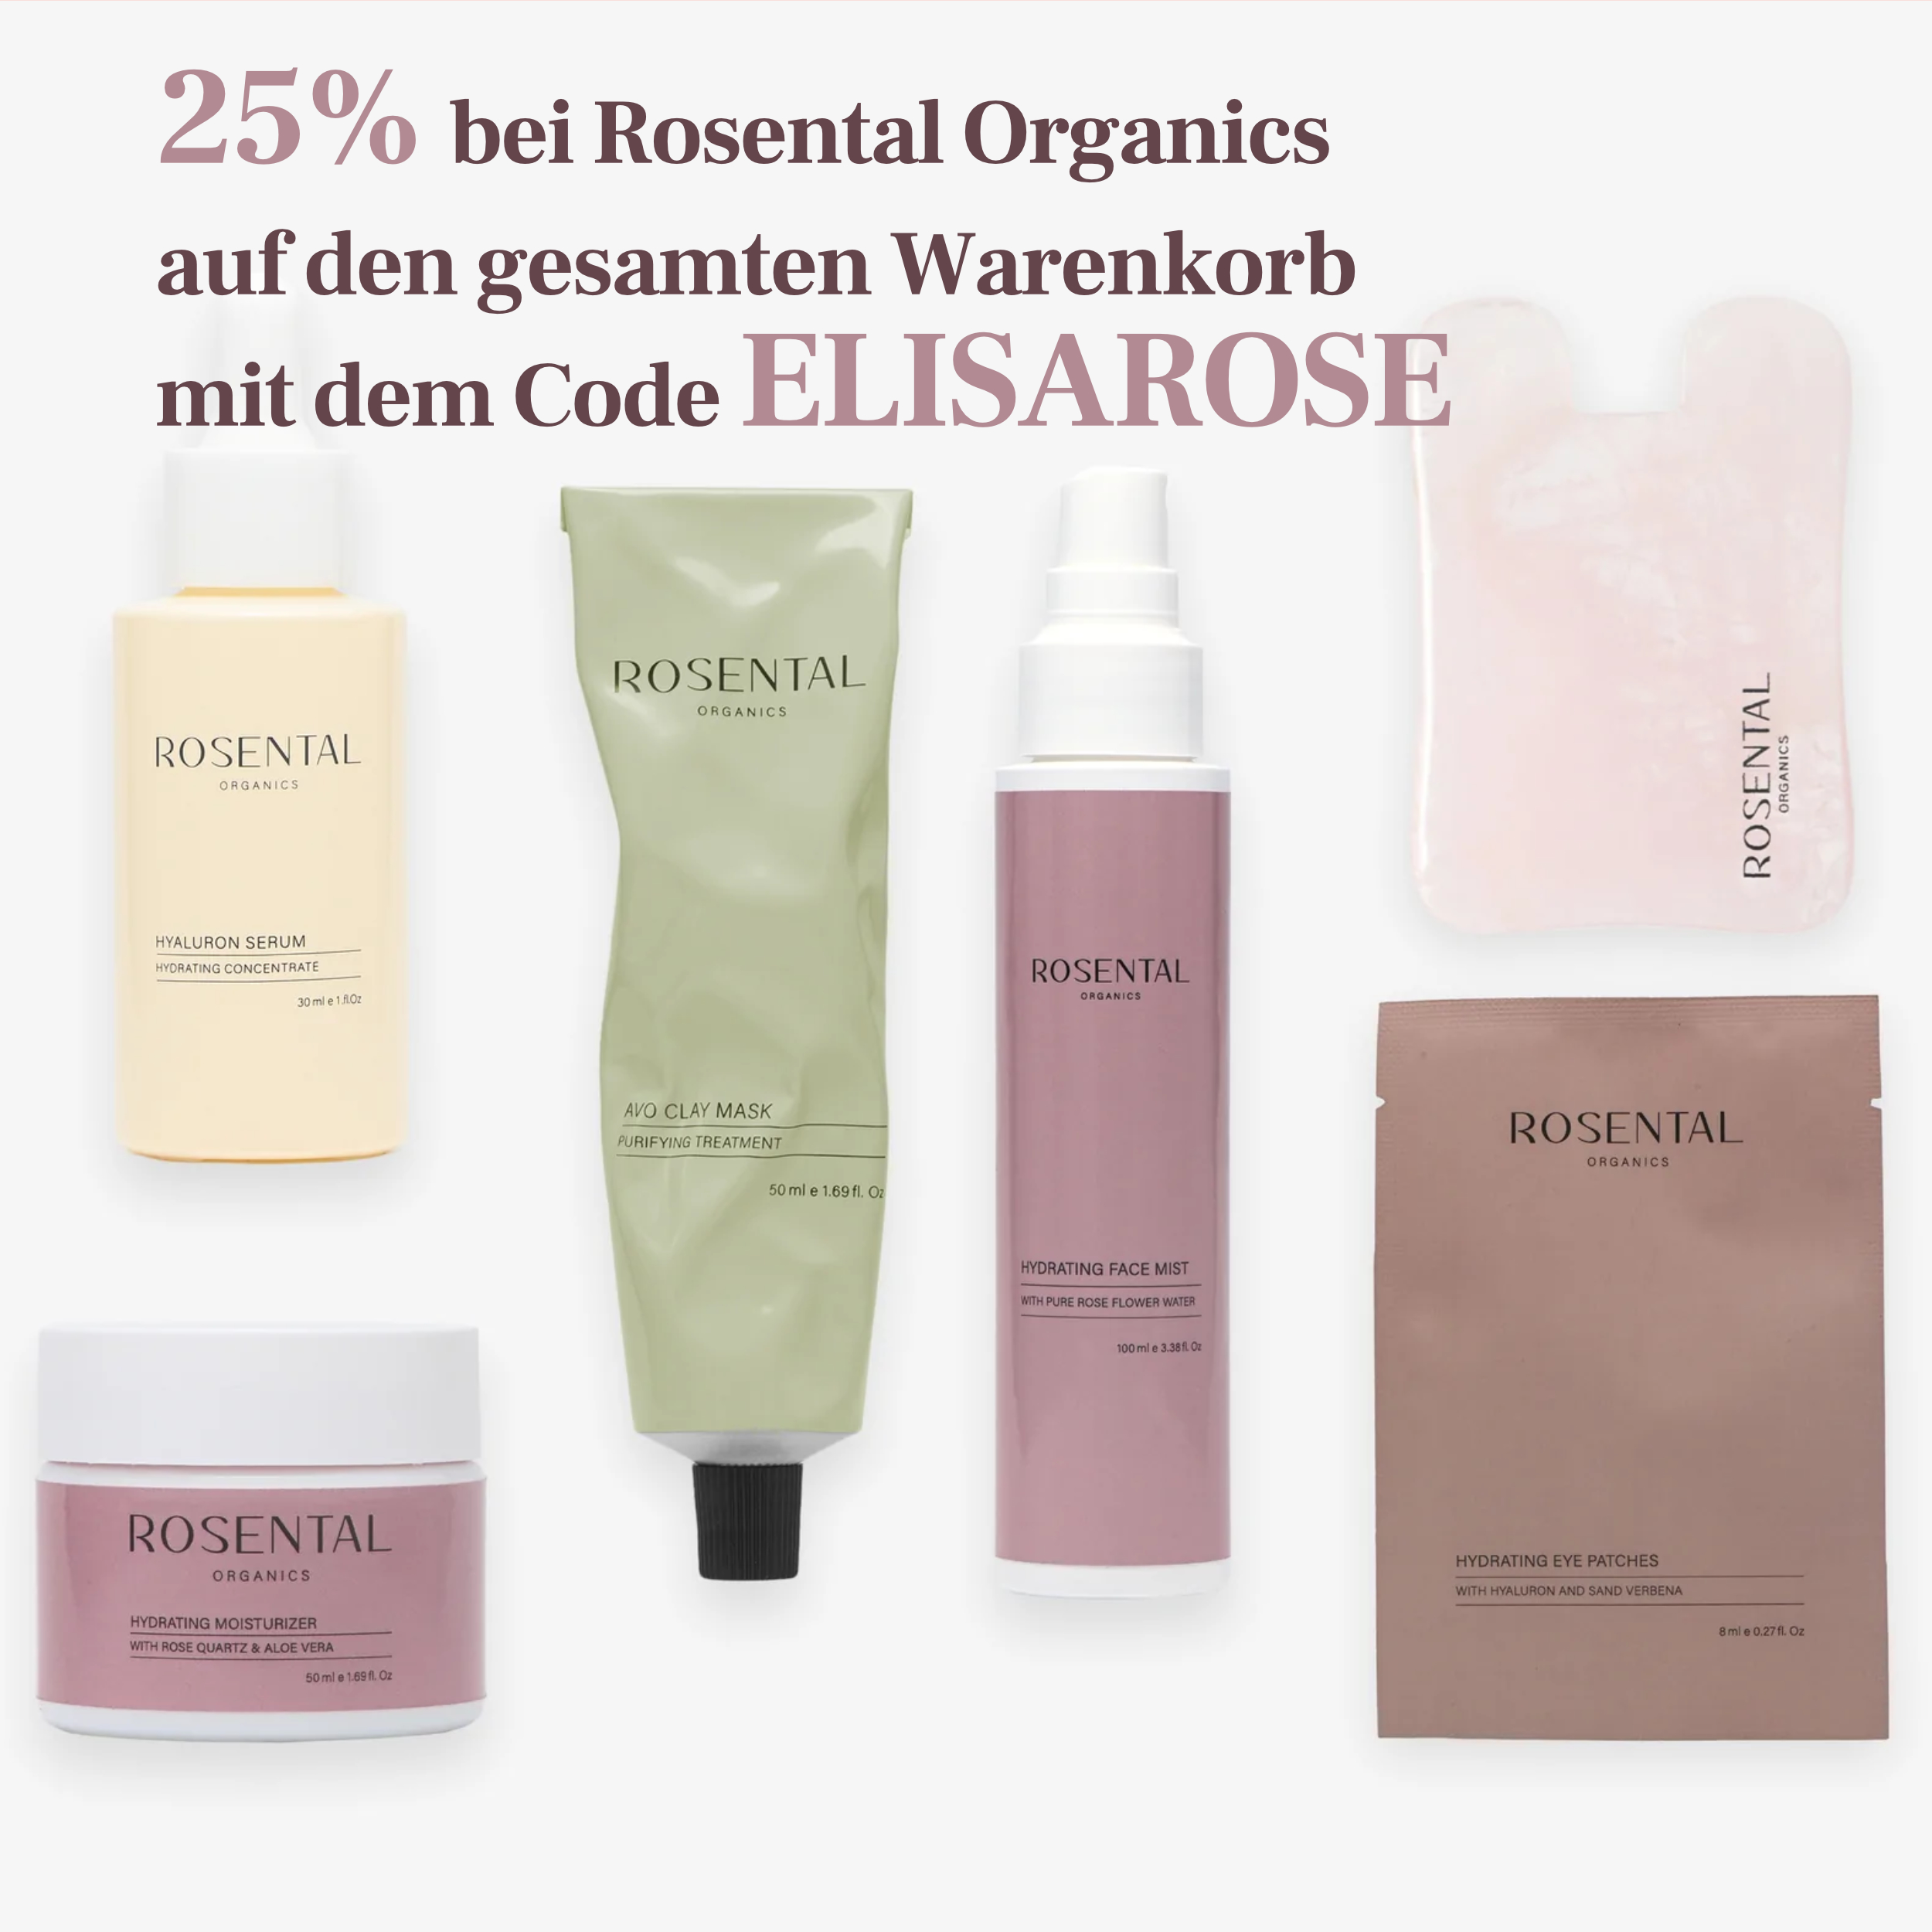 Rosental Organics Rabatt mit 25% auf den gesamten Warenkrb